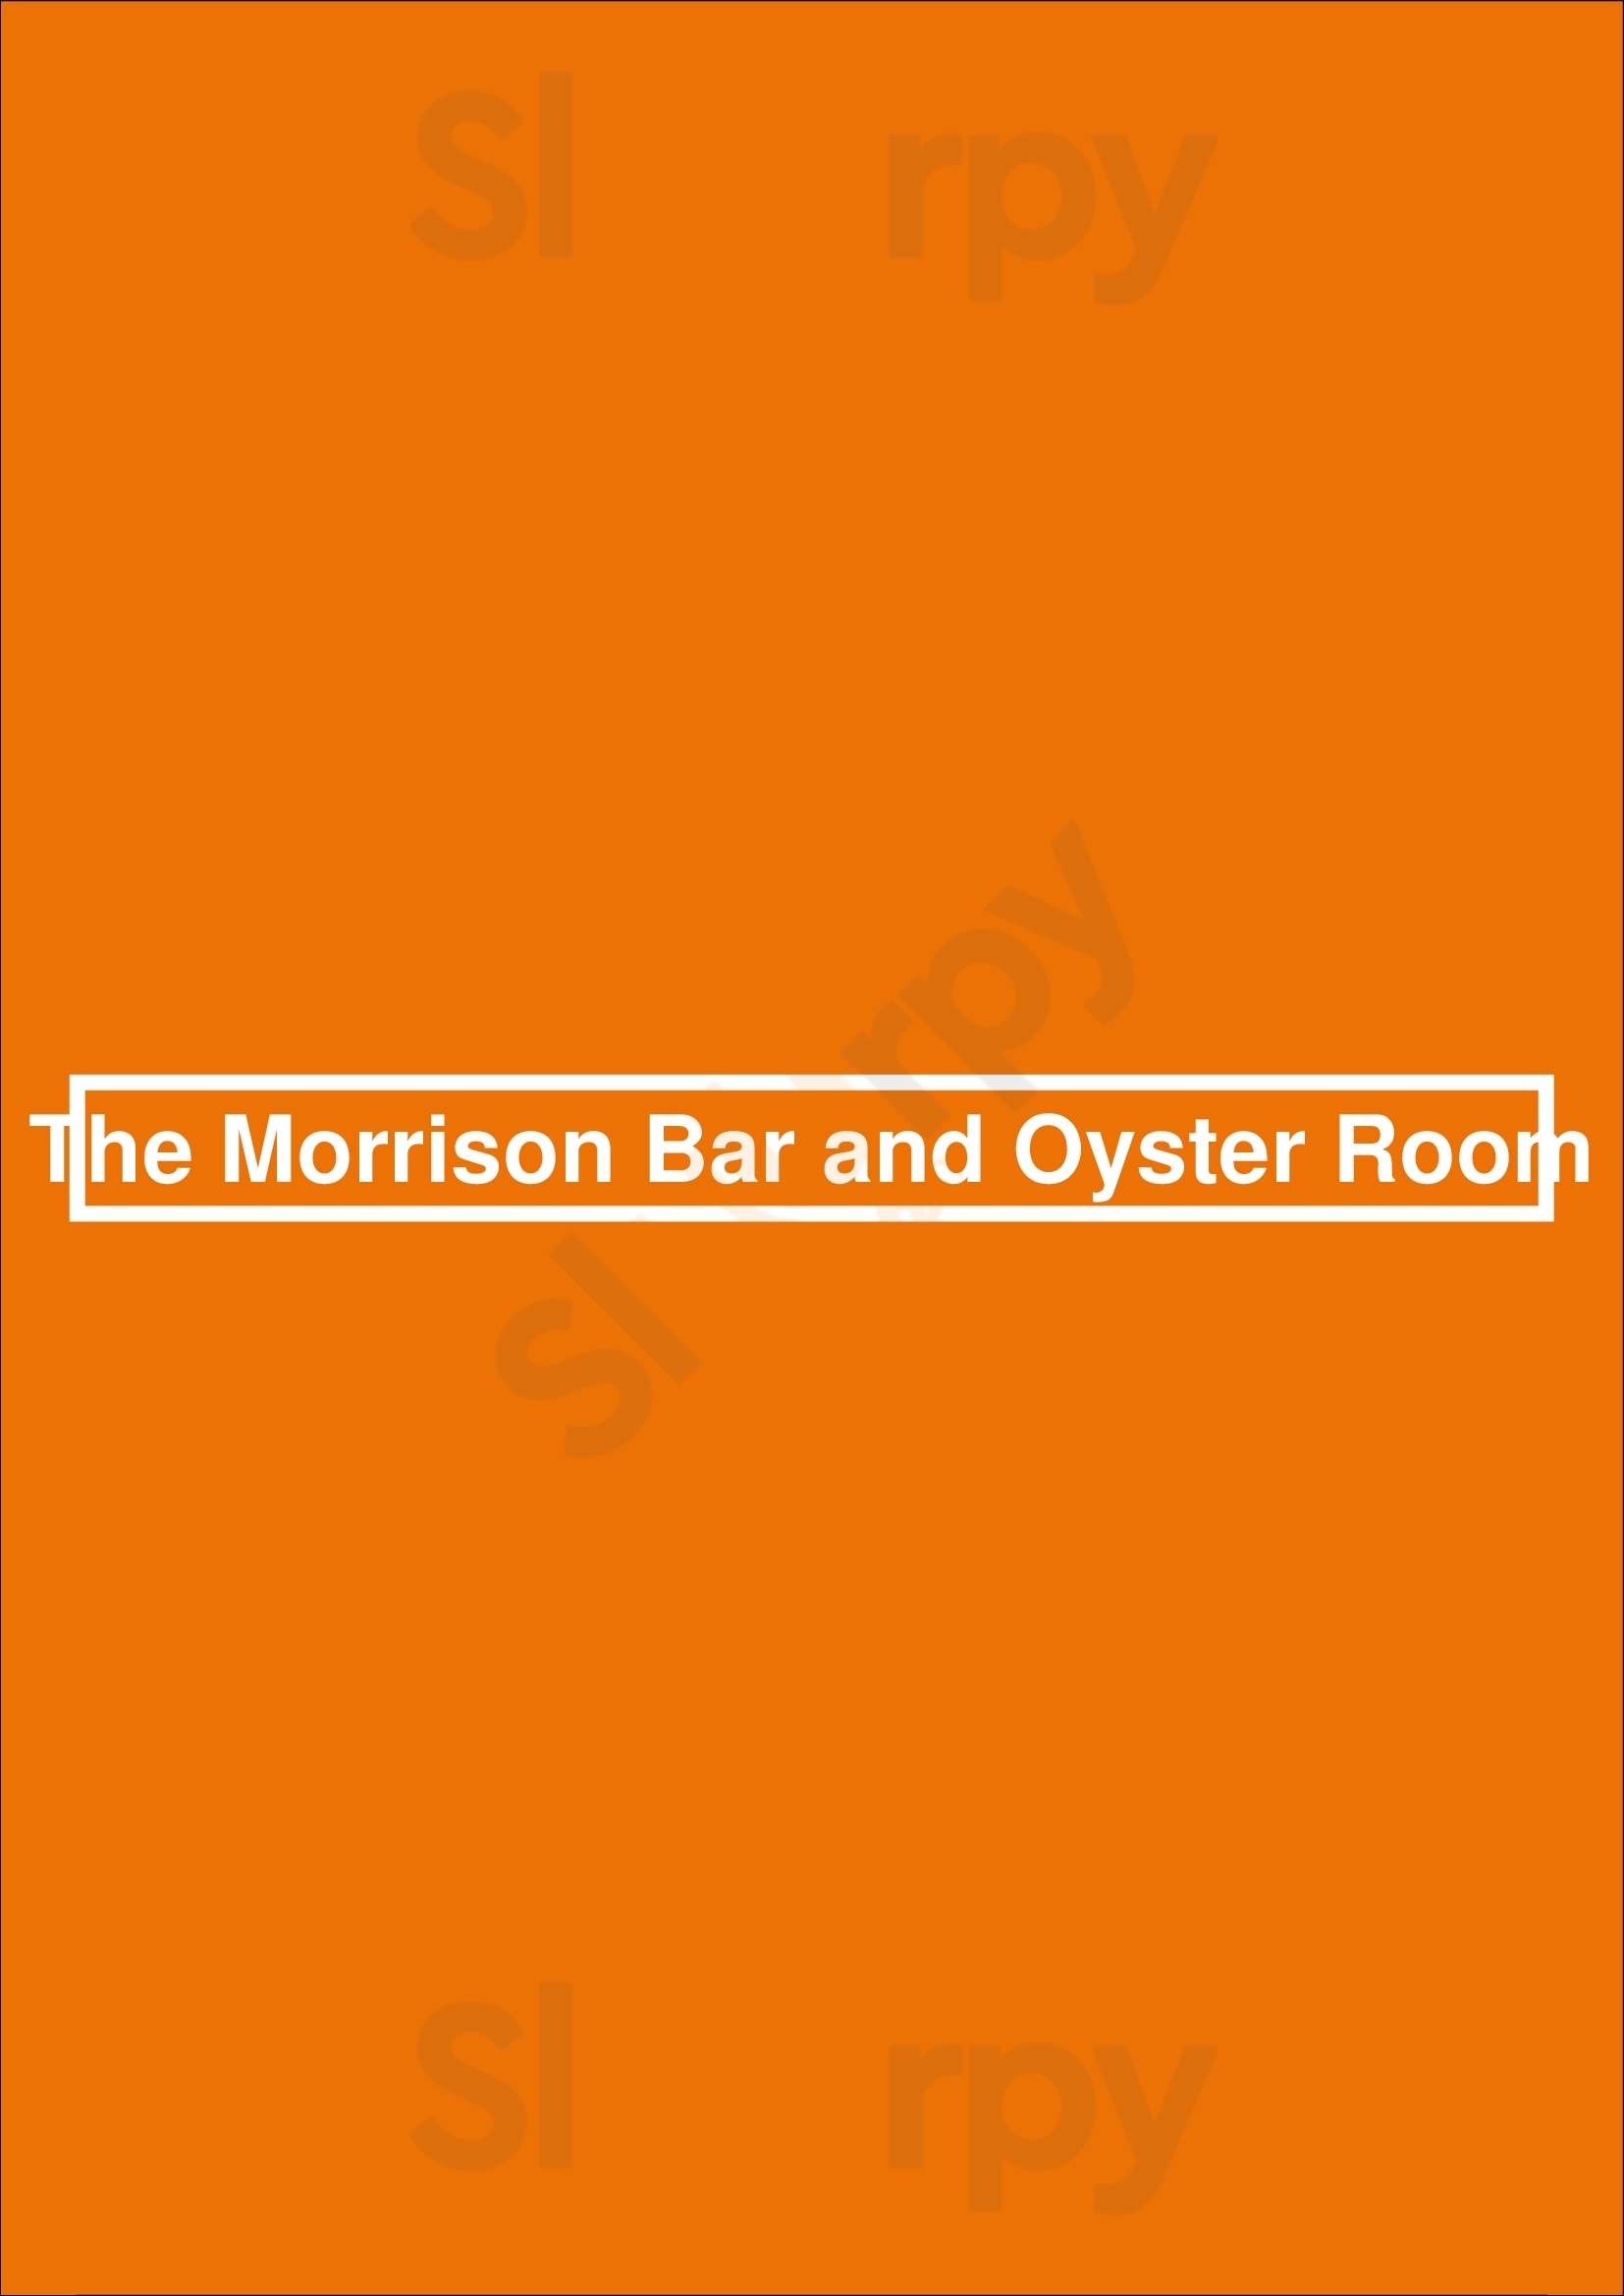 The Morrison Bar And Oyster Room Sydney Menu - 1